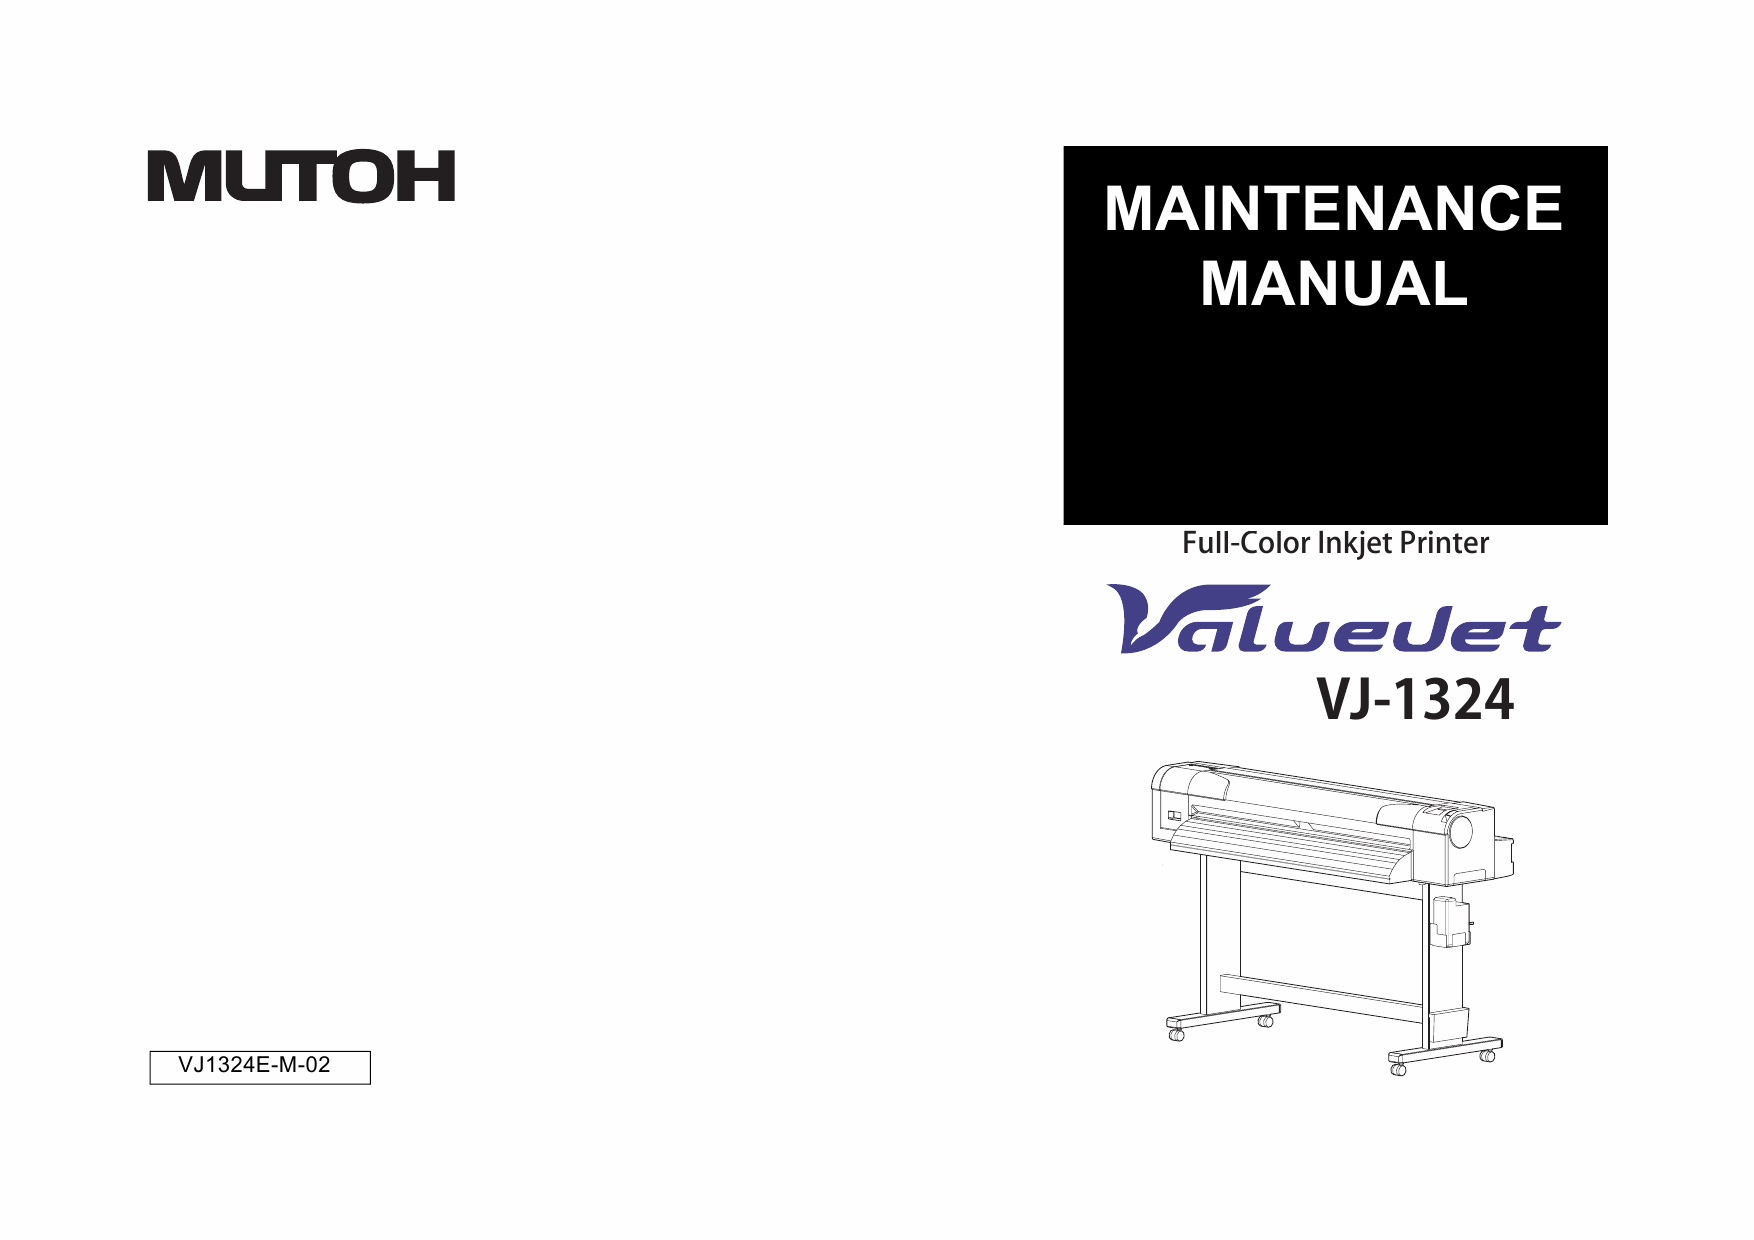 MUTOH ValueJet VJ 1324 MAINTENANCE Service and Parts Manual-1